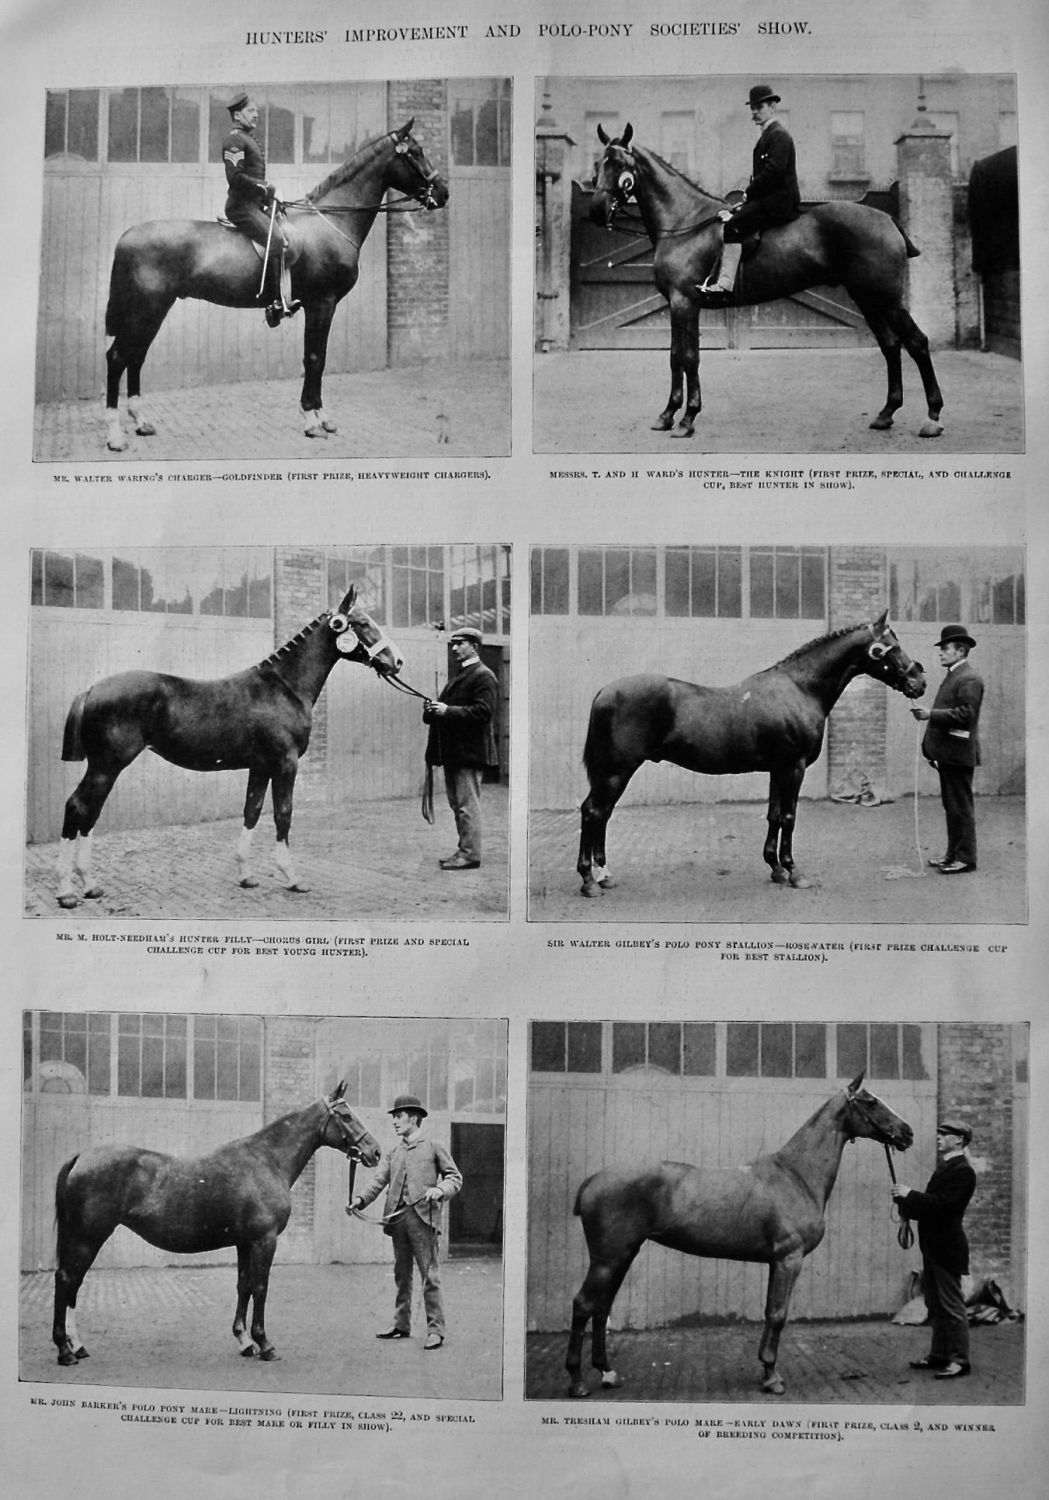 Hunters' Improvement and Polo-Pony Societies' Show.  1900.